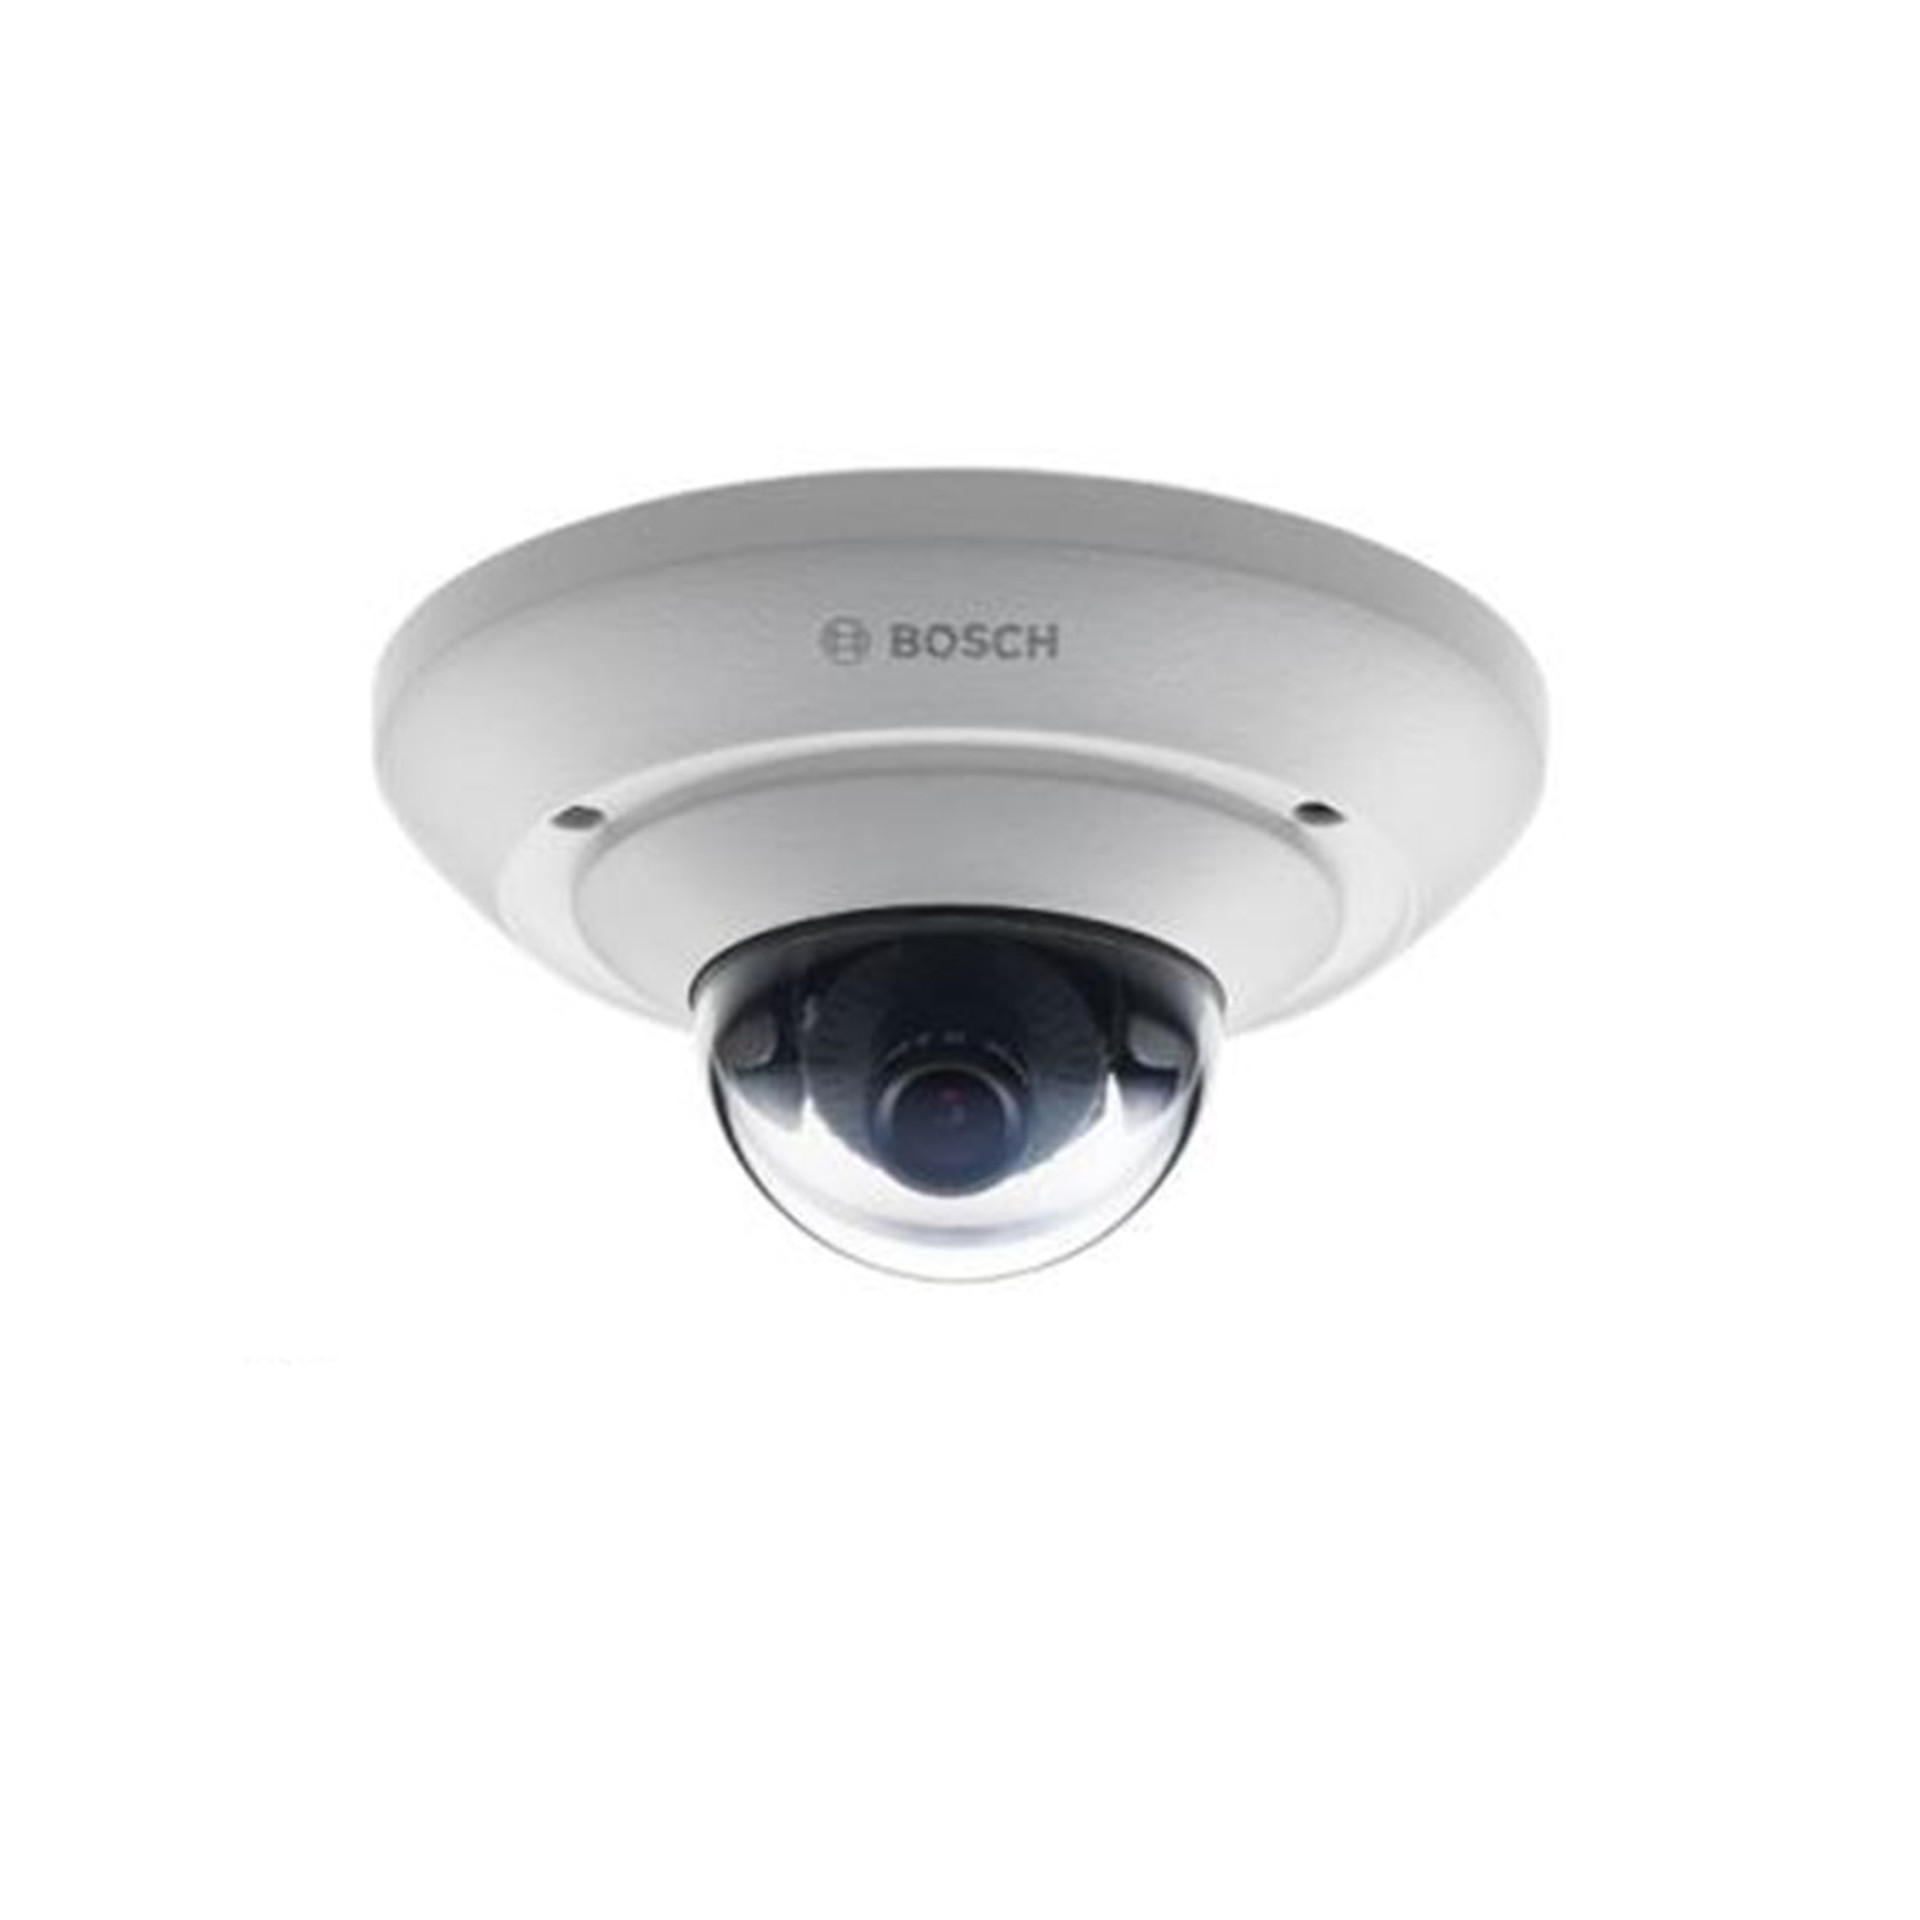 Bosch NUC-51022-F4 2MP Outdoor Mini Dome IP Security Camera